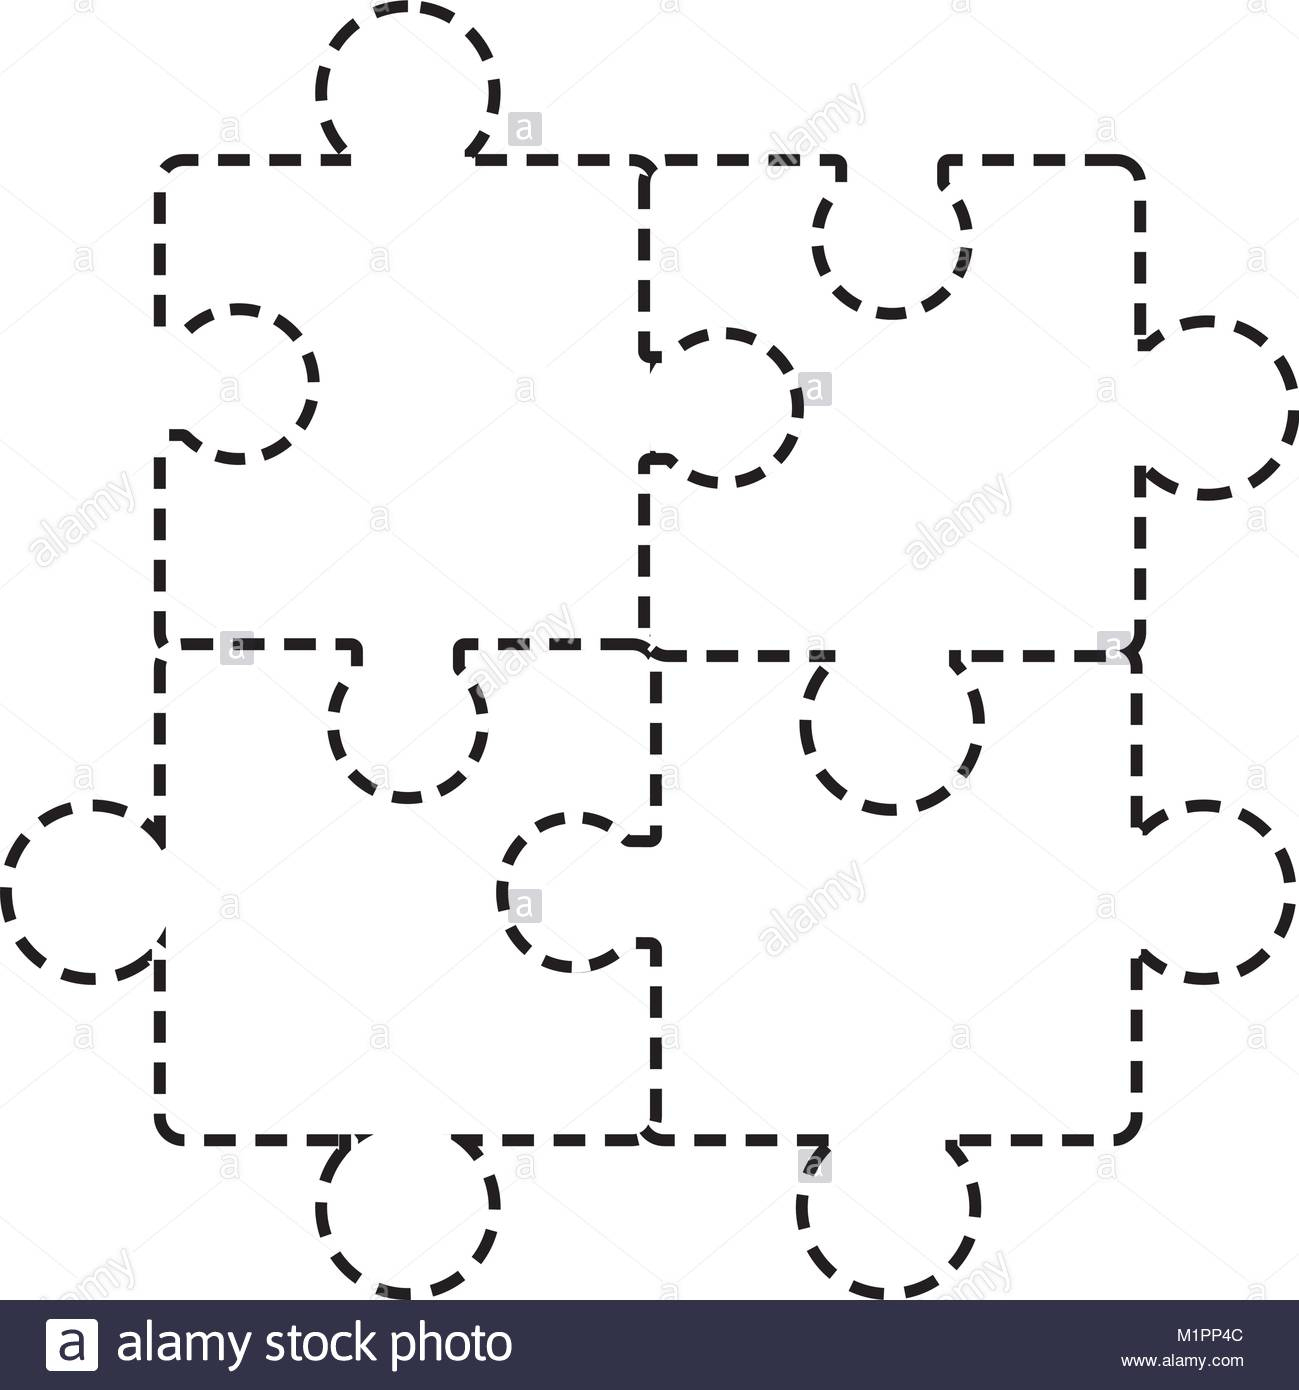 Puzzles Black And White Stock Photos &amp; Images - Alamy intérieur Sudoku Vierge